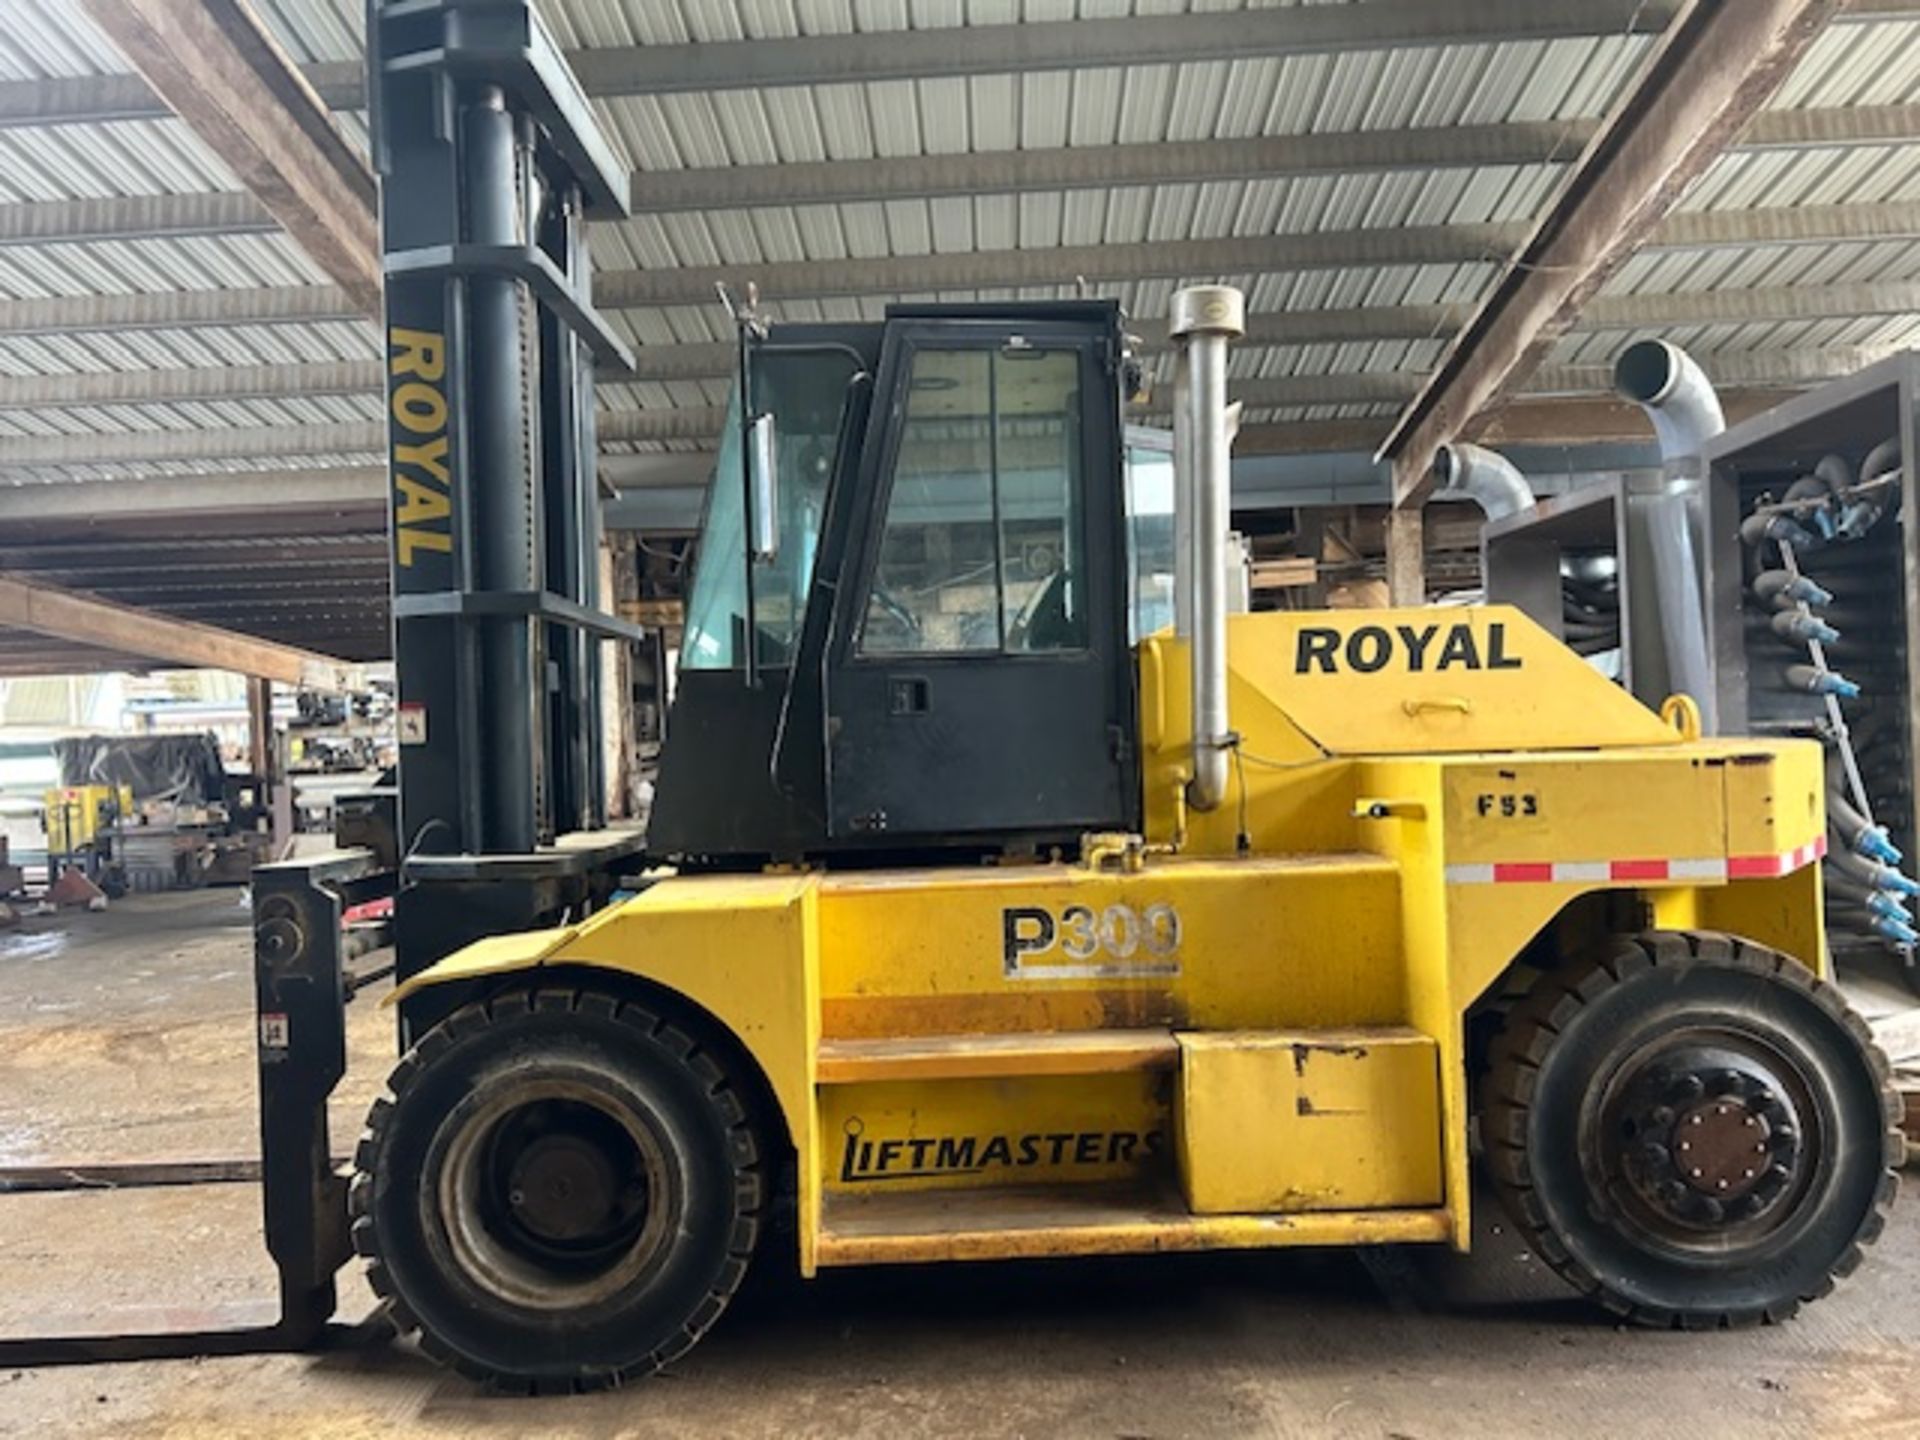 Royal P300 30,000 lb Forklift, 117" Lft Ht, 2 Stage Mast (LOCATION: Minster, OHIO)